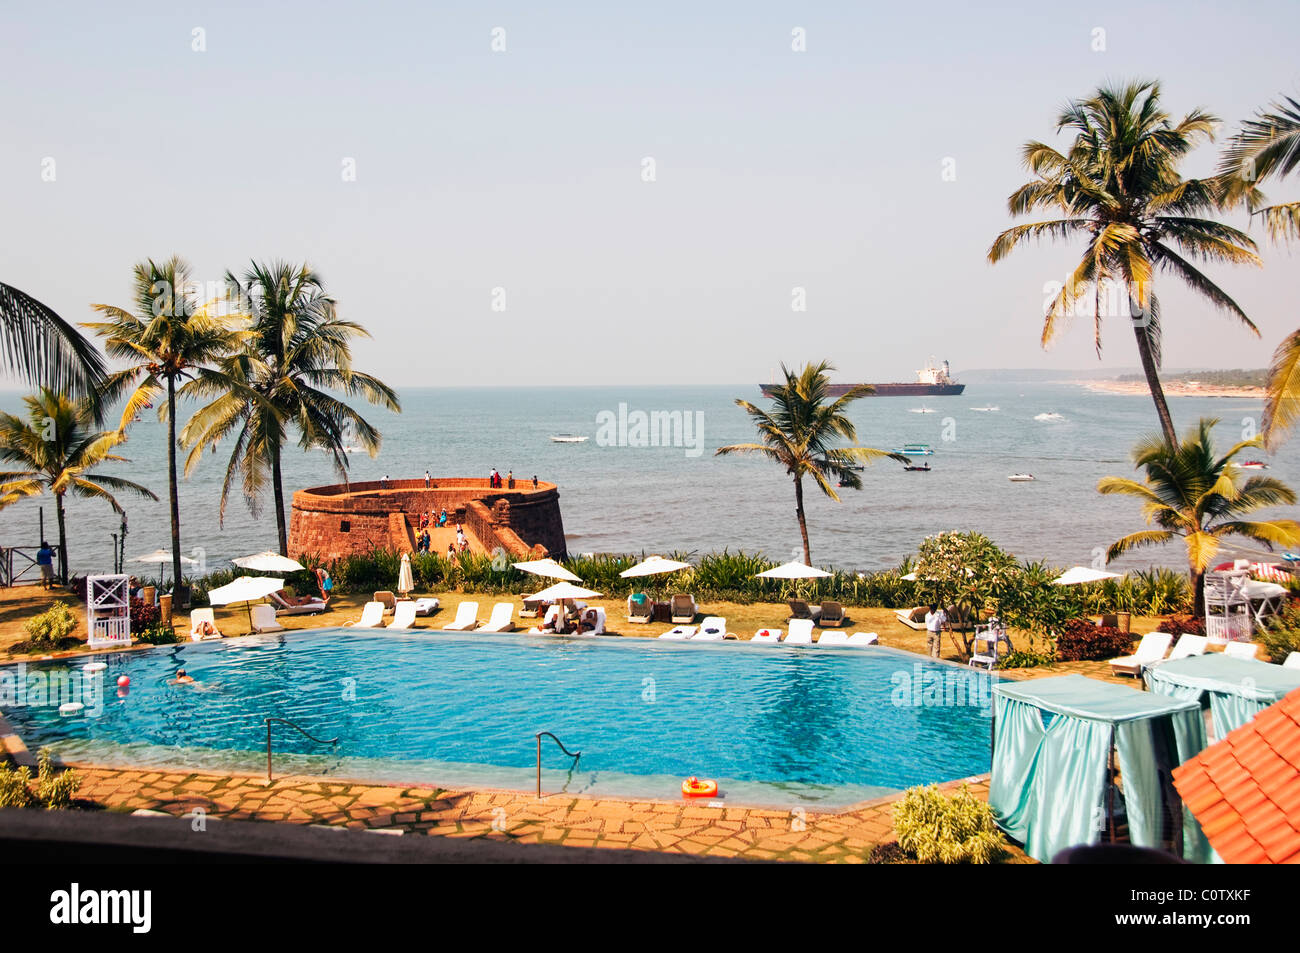 Tourist resort on the beach, Goa, India Stock Photo